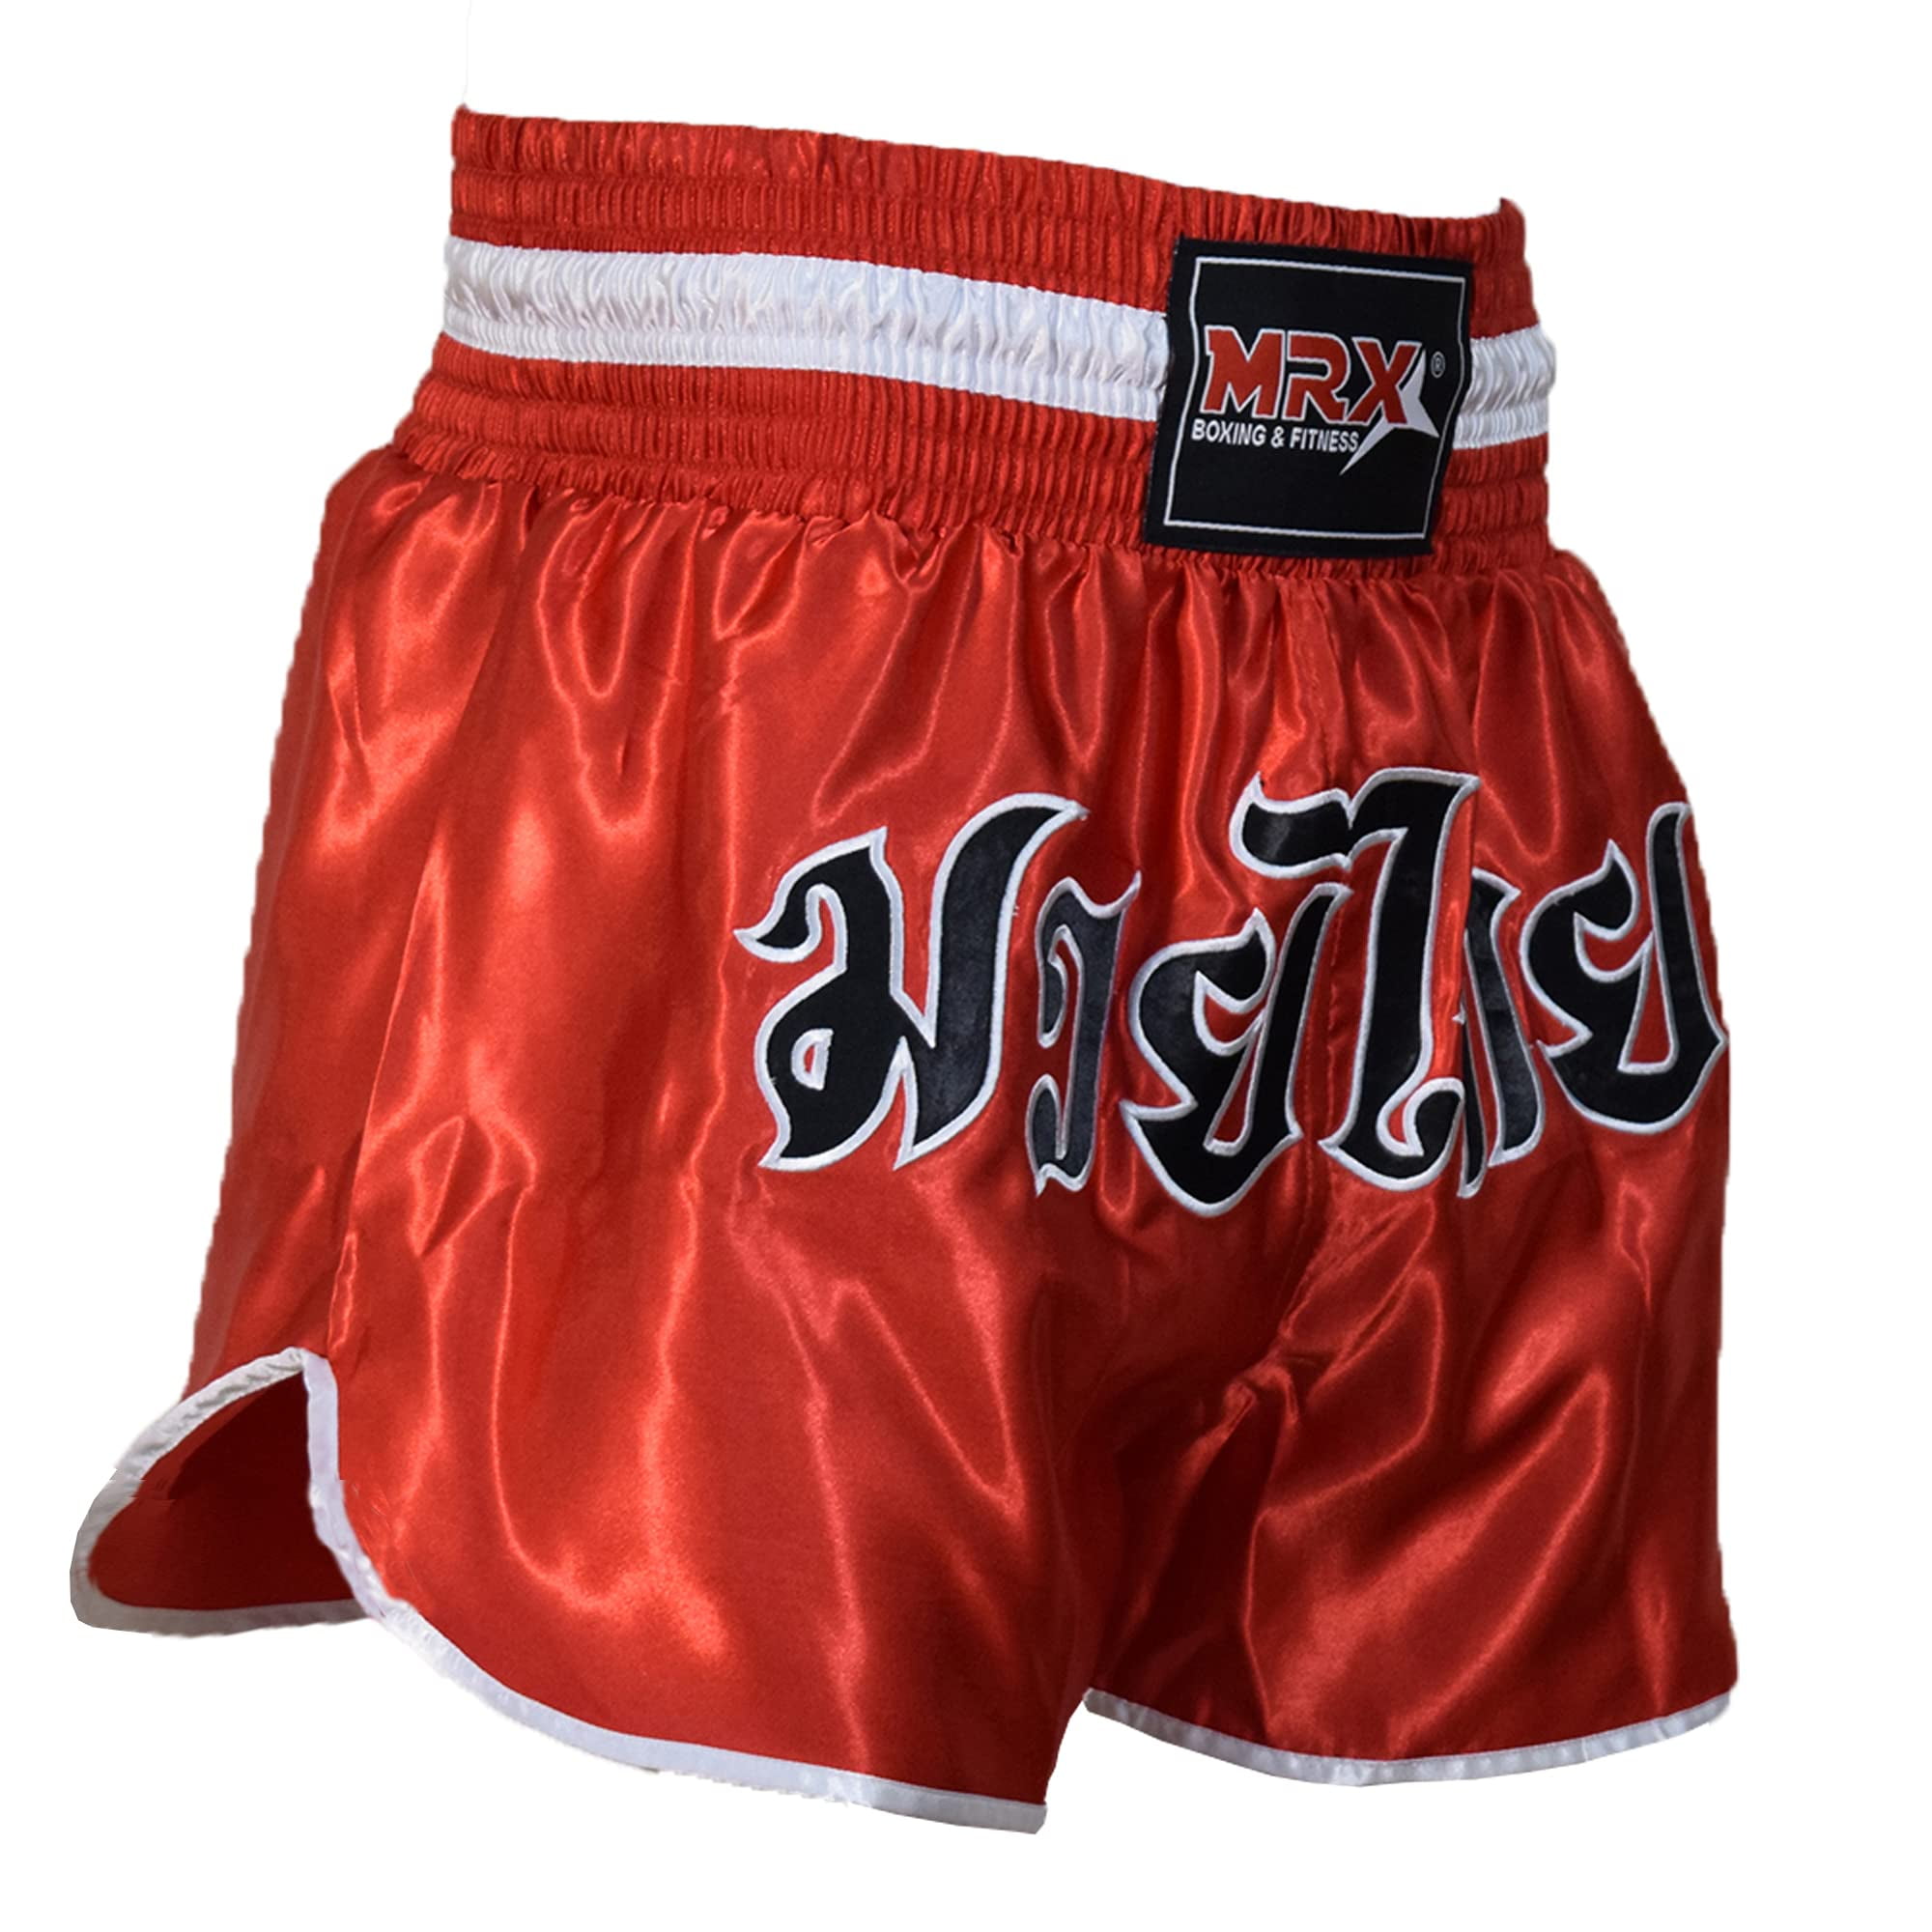 New Mma Boxing Fighting Shorts Red & Black Muay Thai Short Training Gym Bad Boy 